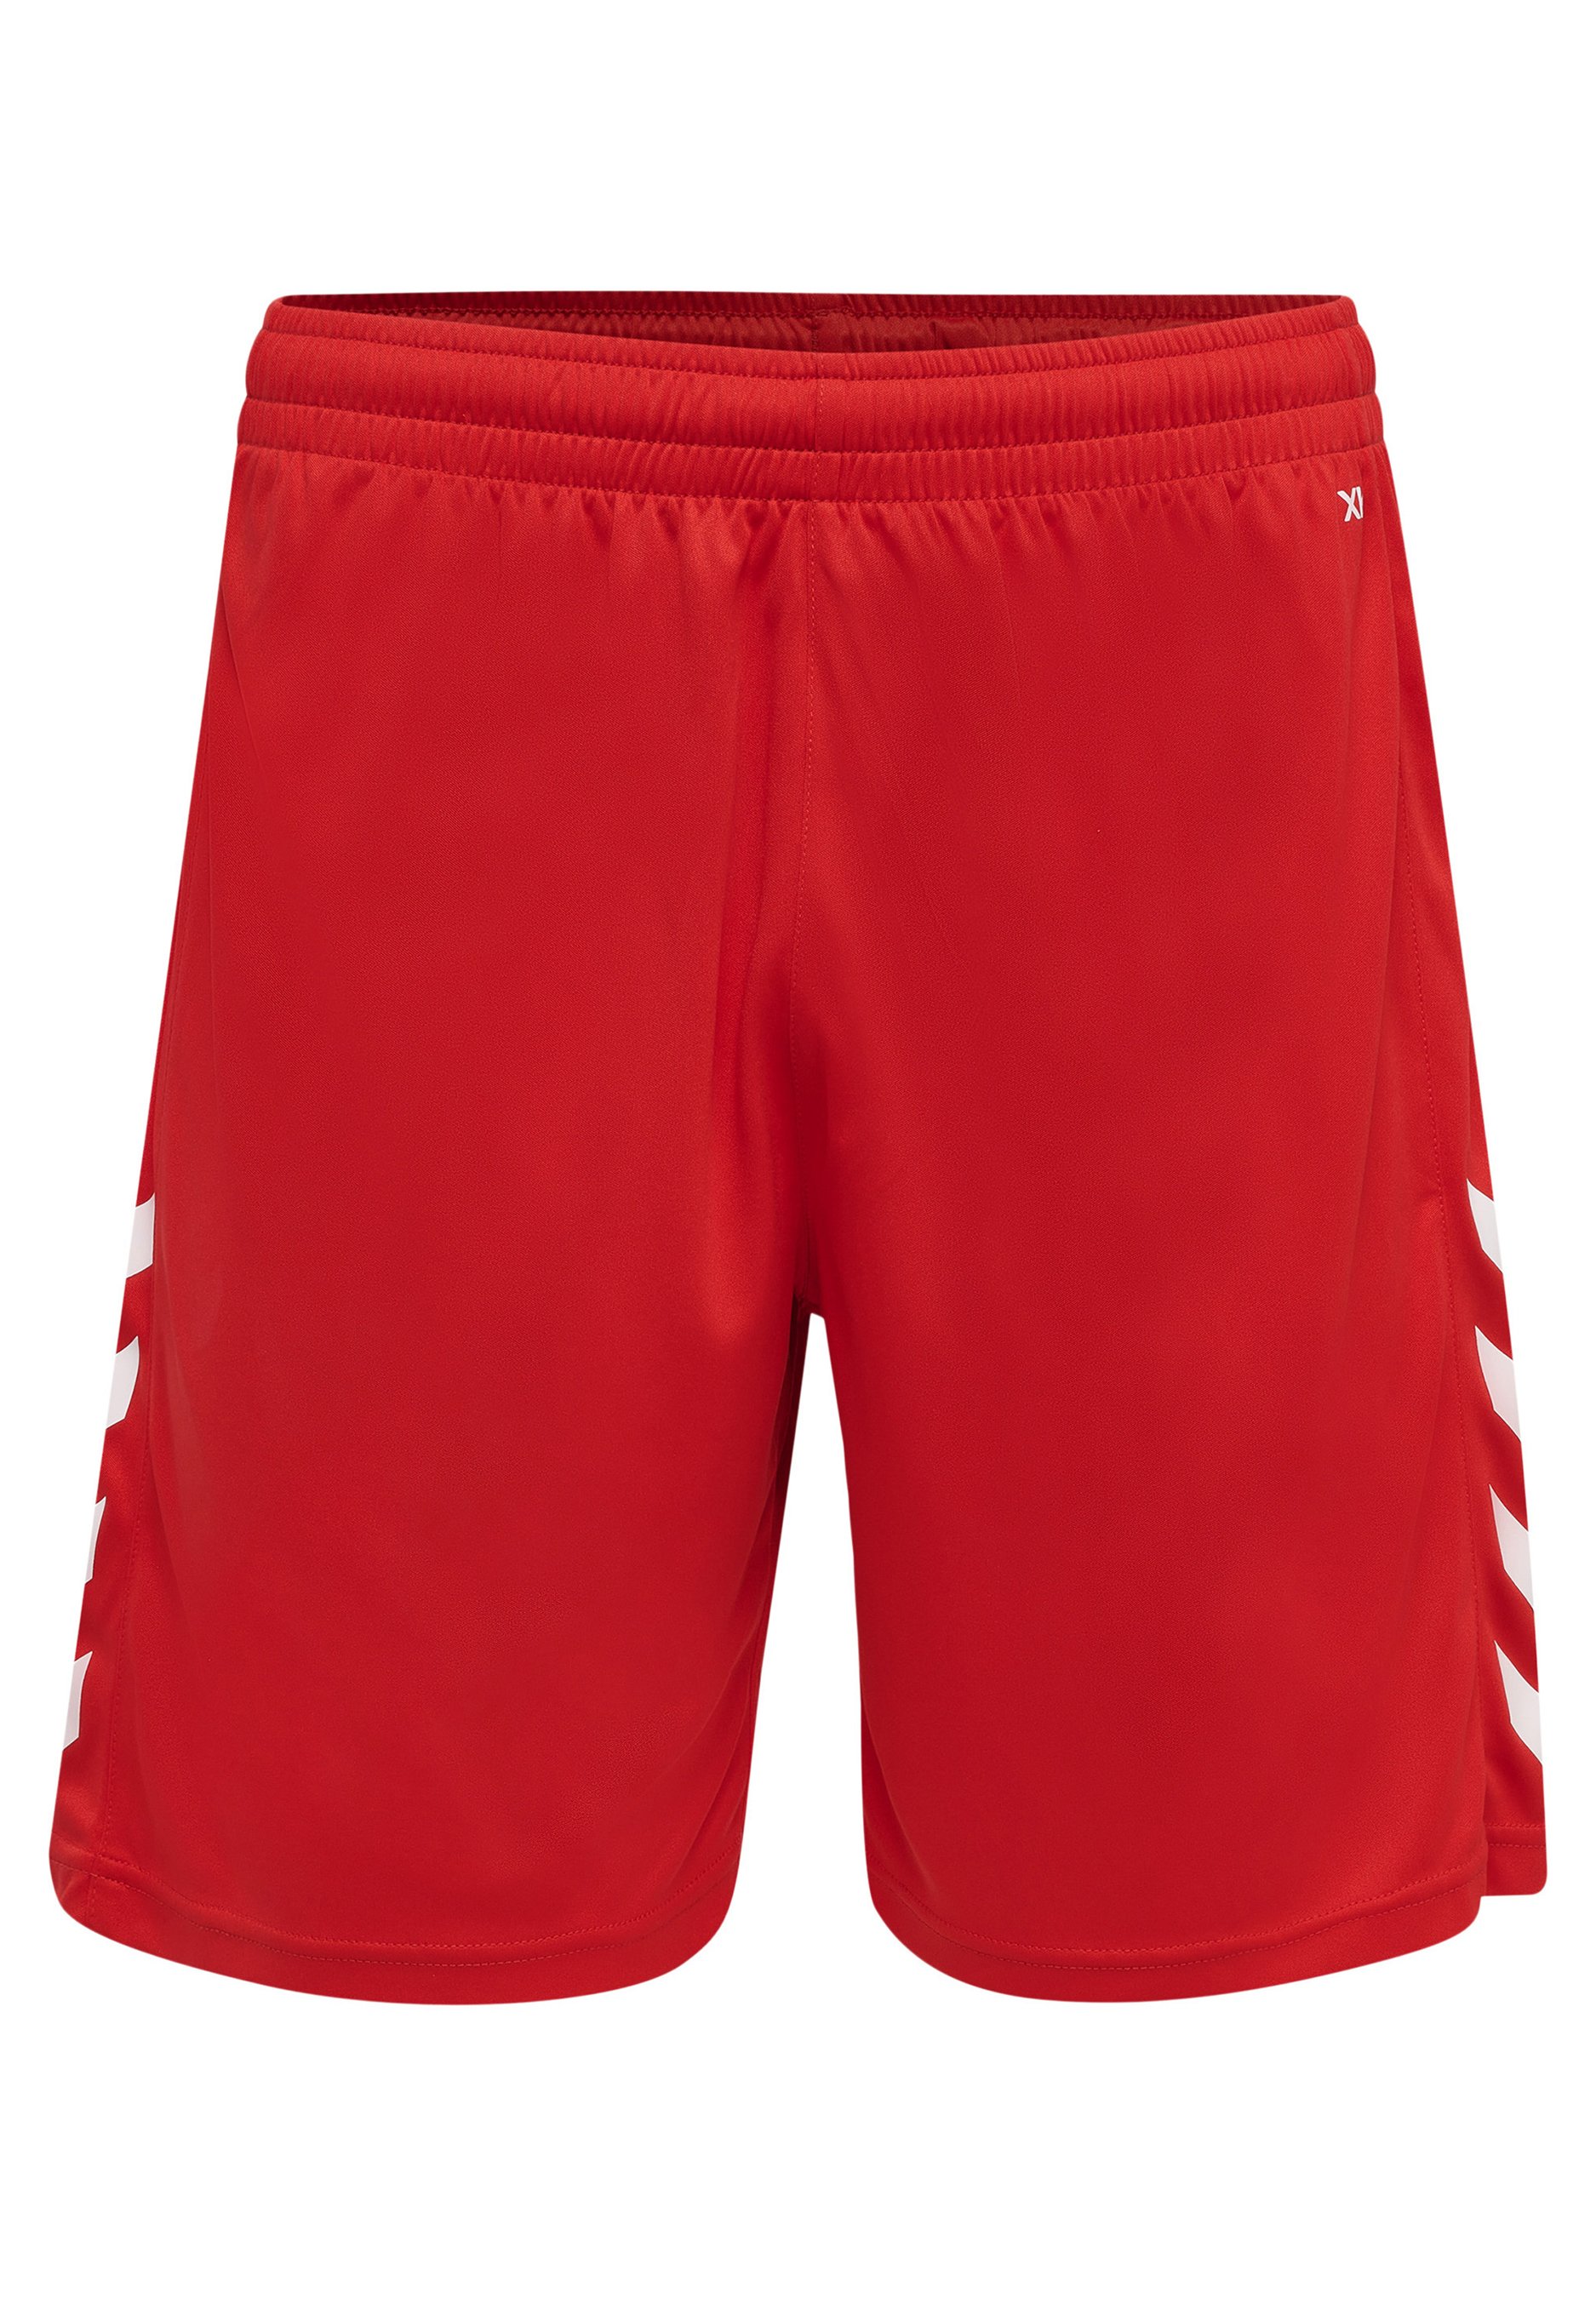 Hummel kurze Sporthose - true red/dunkelrot